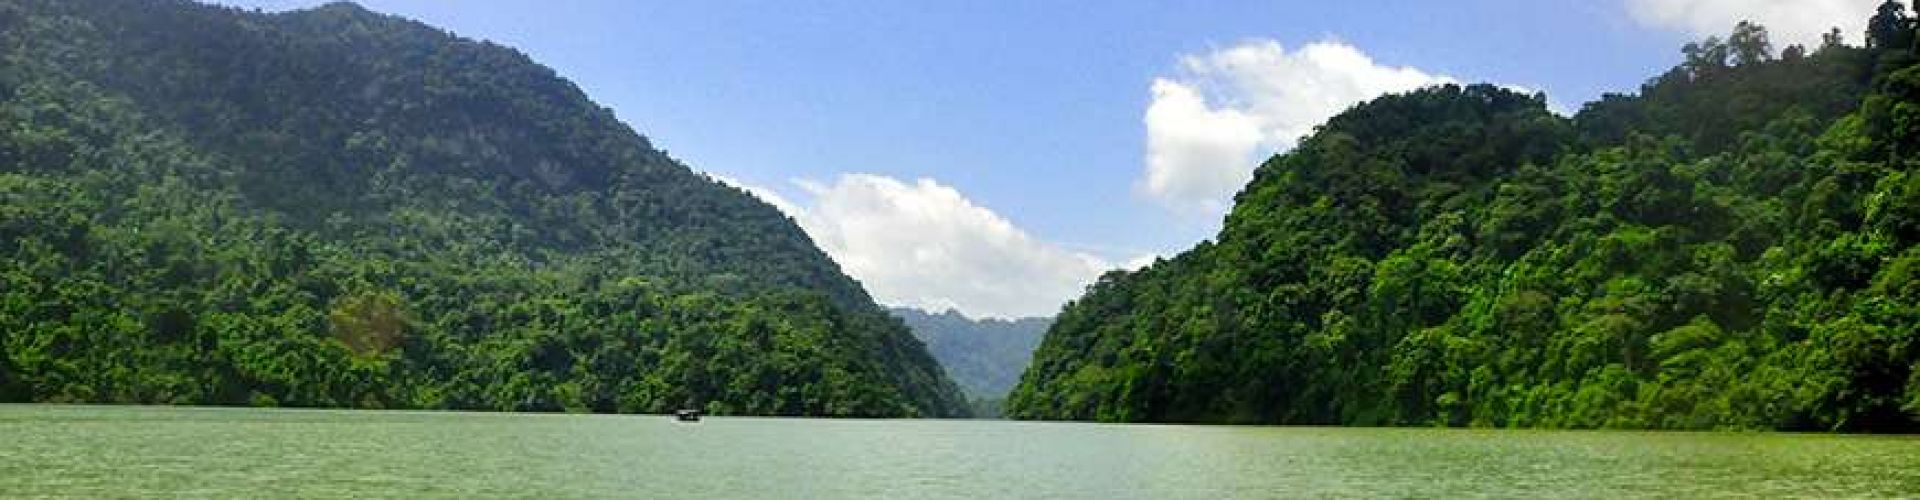 Destinations in Ba Bể Lake